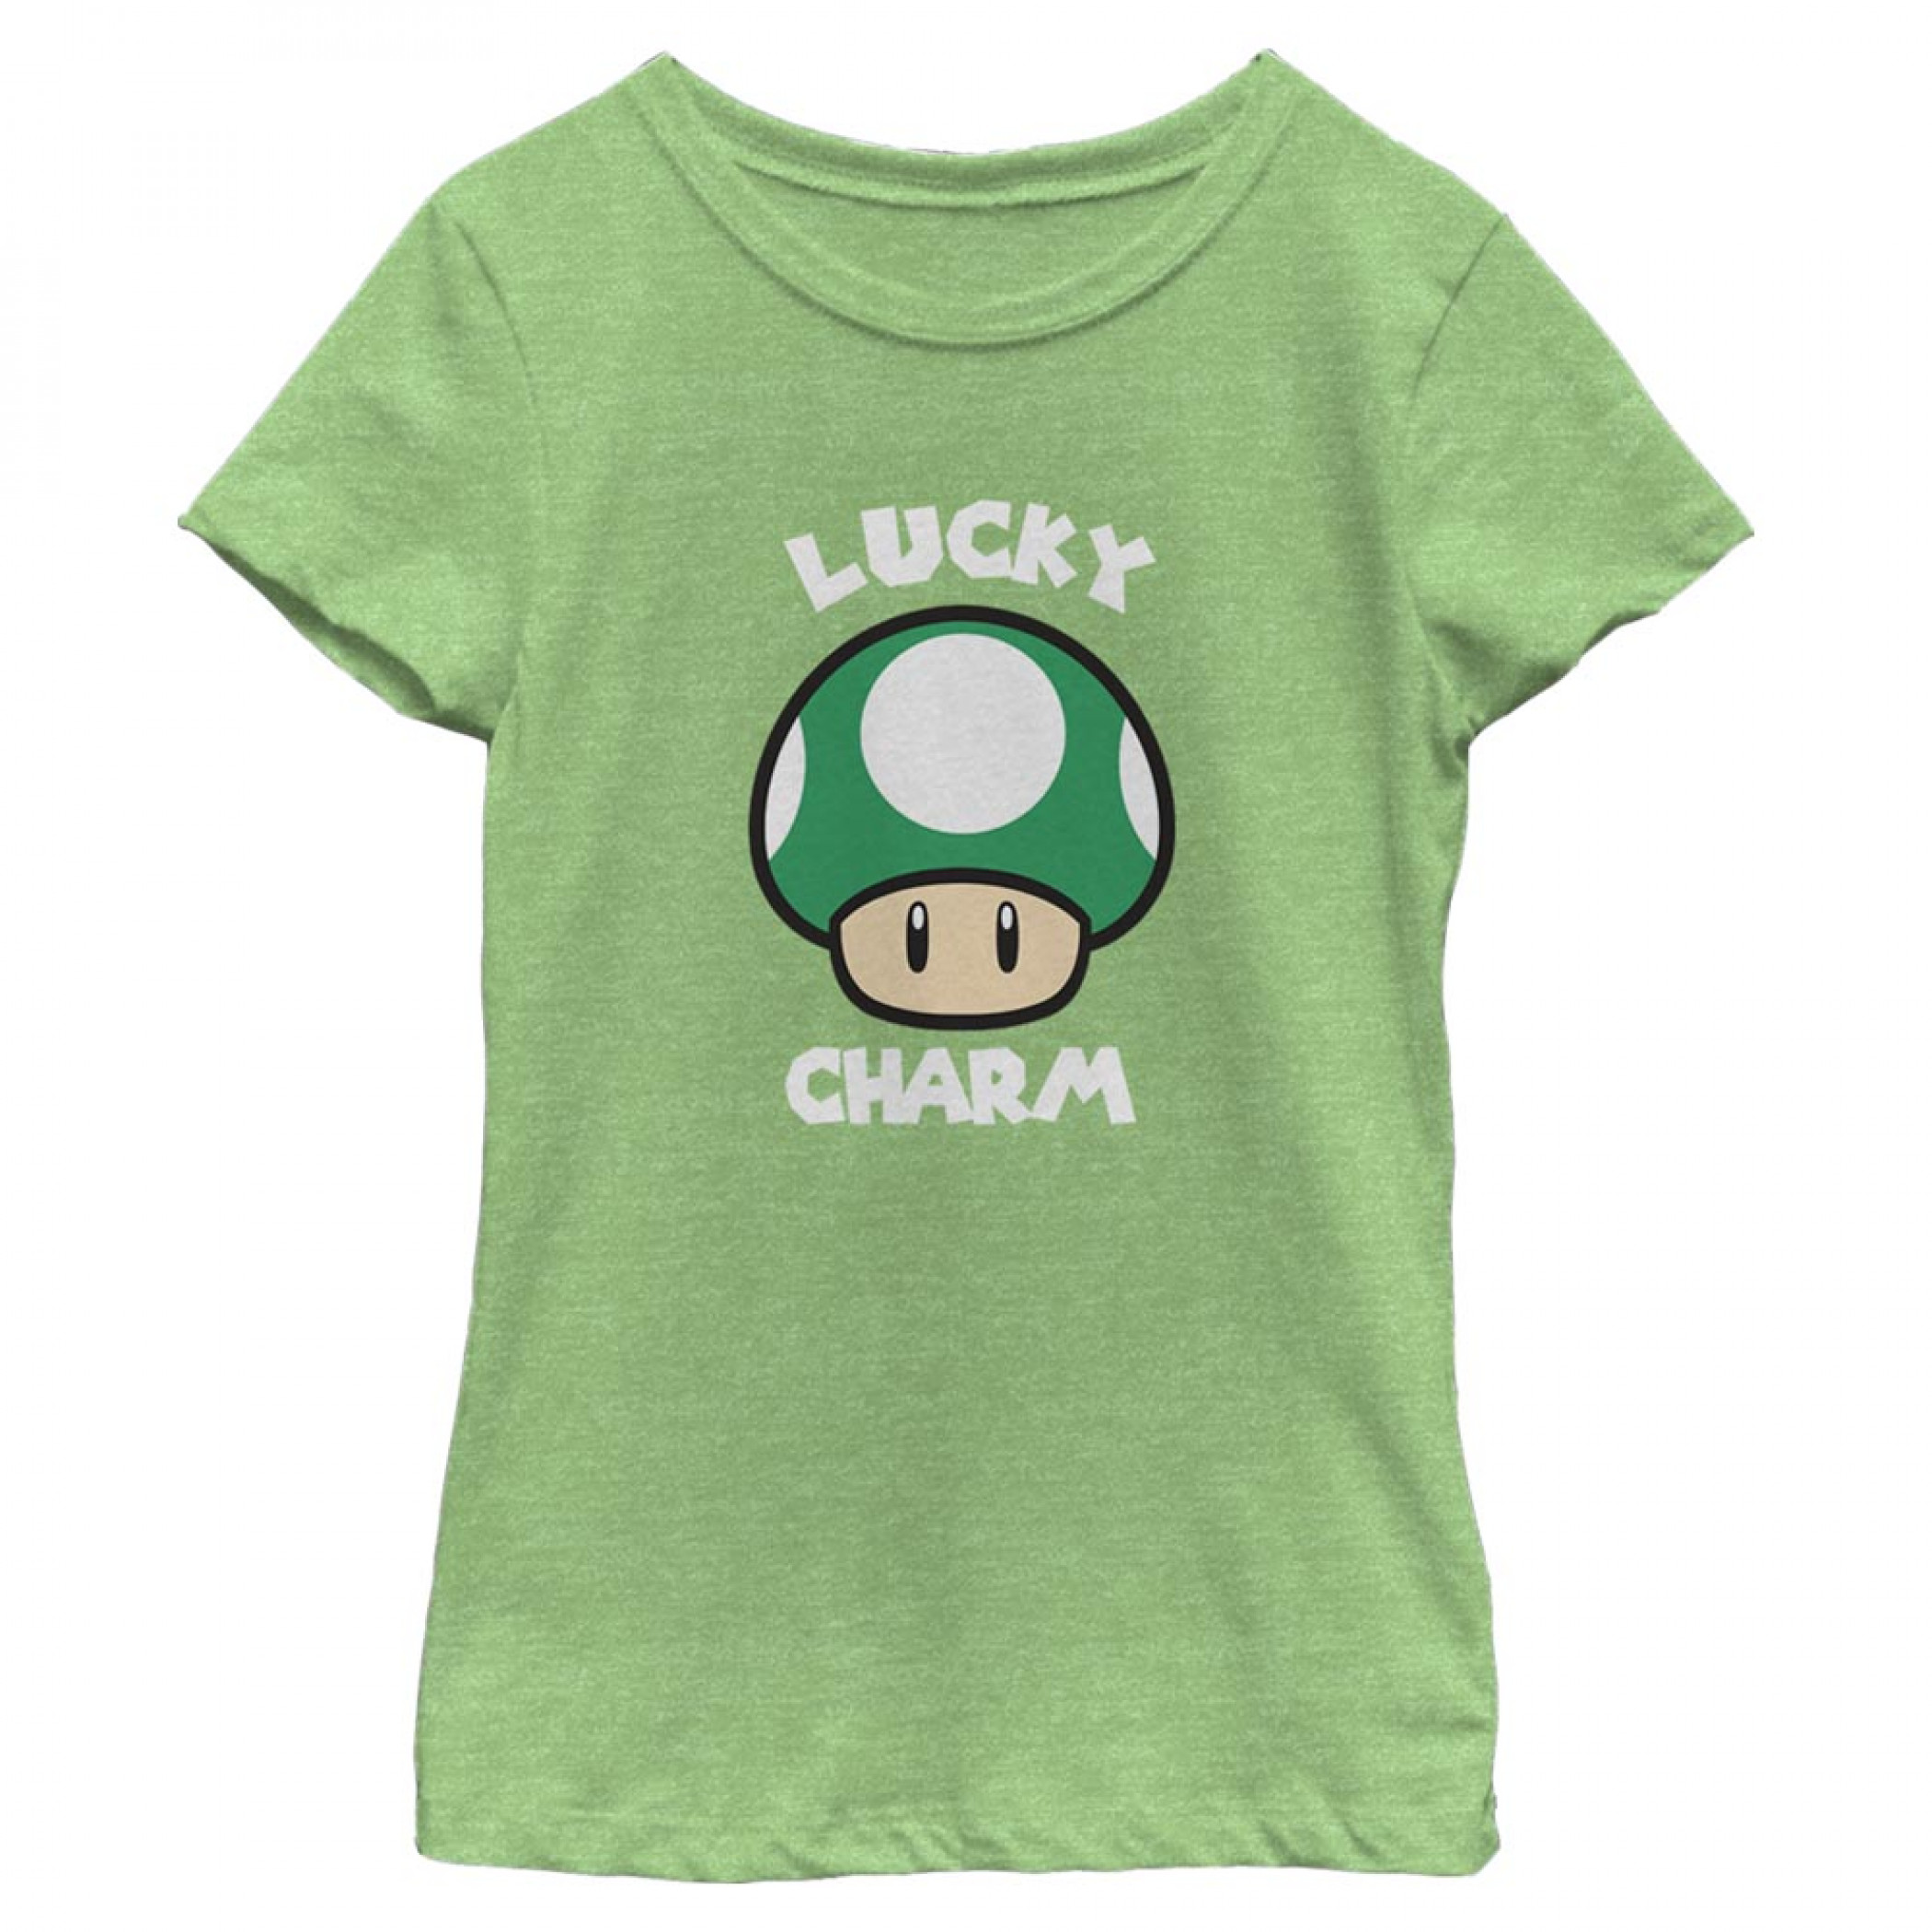 Super Mario Bros. 1-Up Lucky Charm Girl's T-Shirt